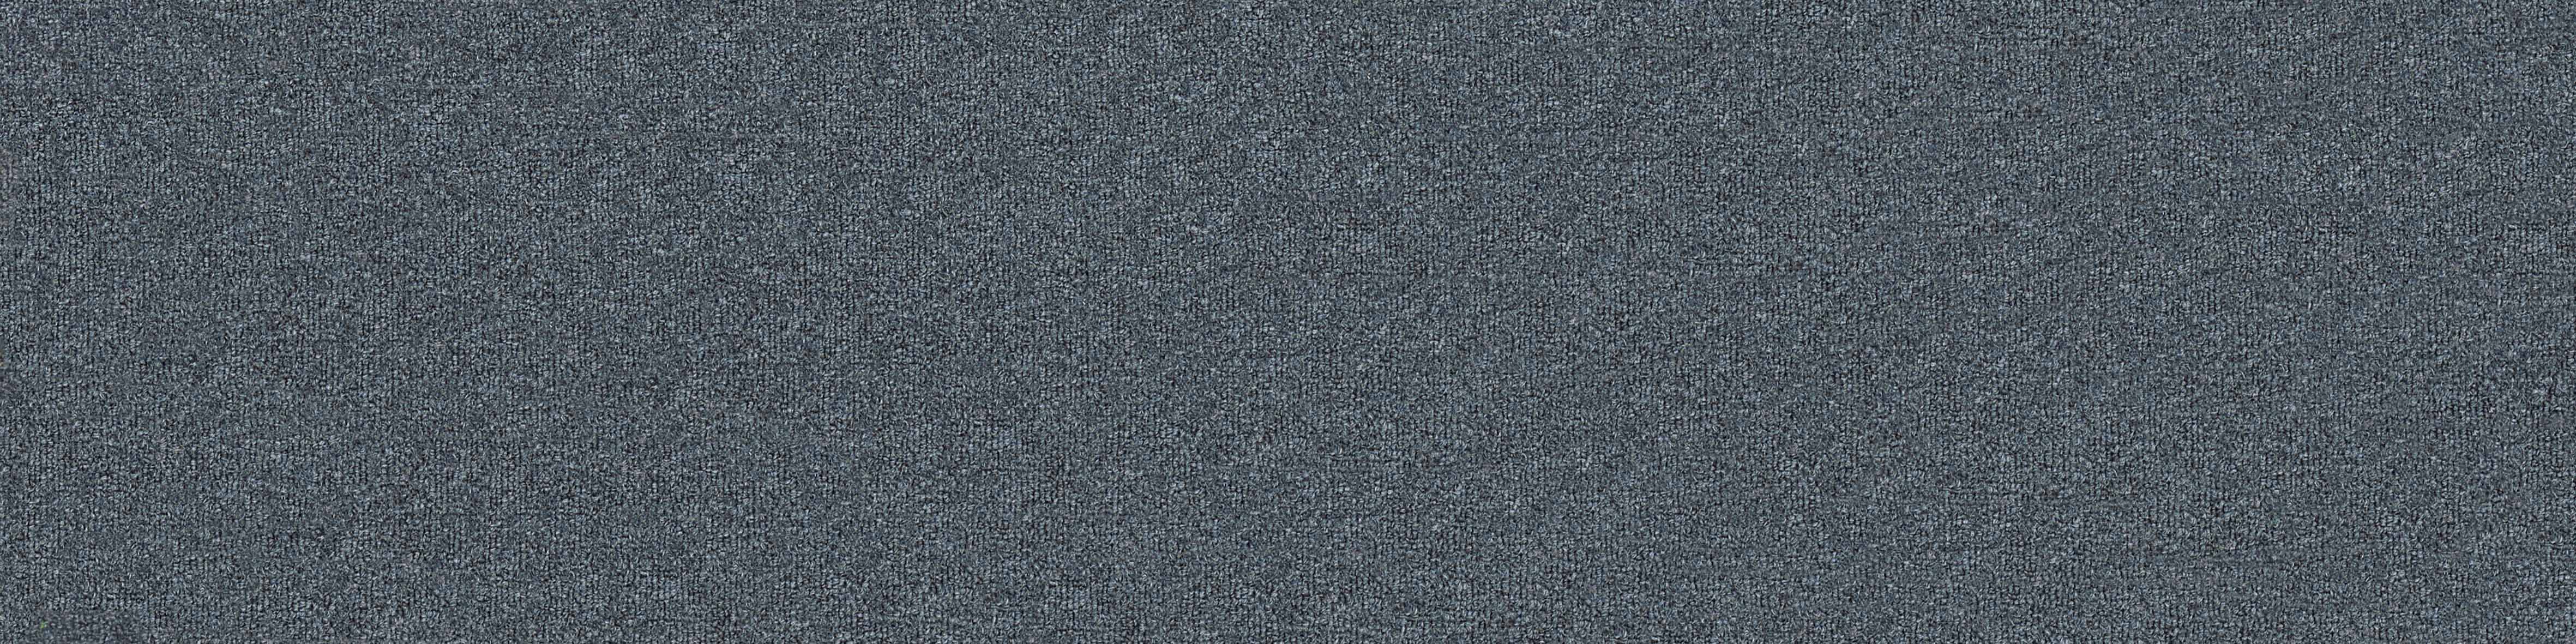 Nylon66 Carpet Tile